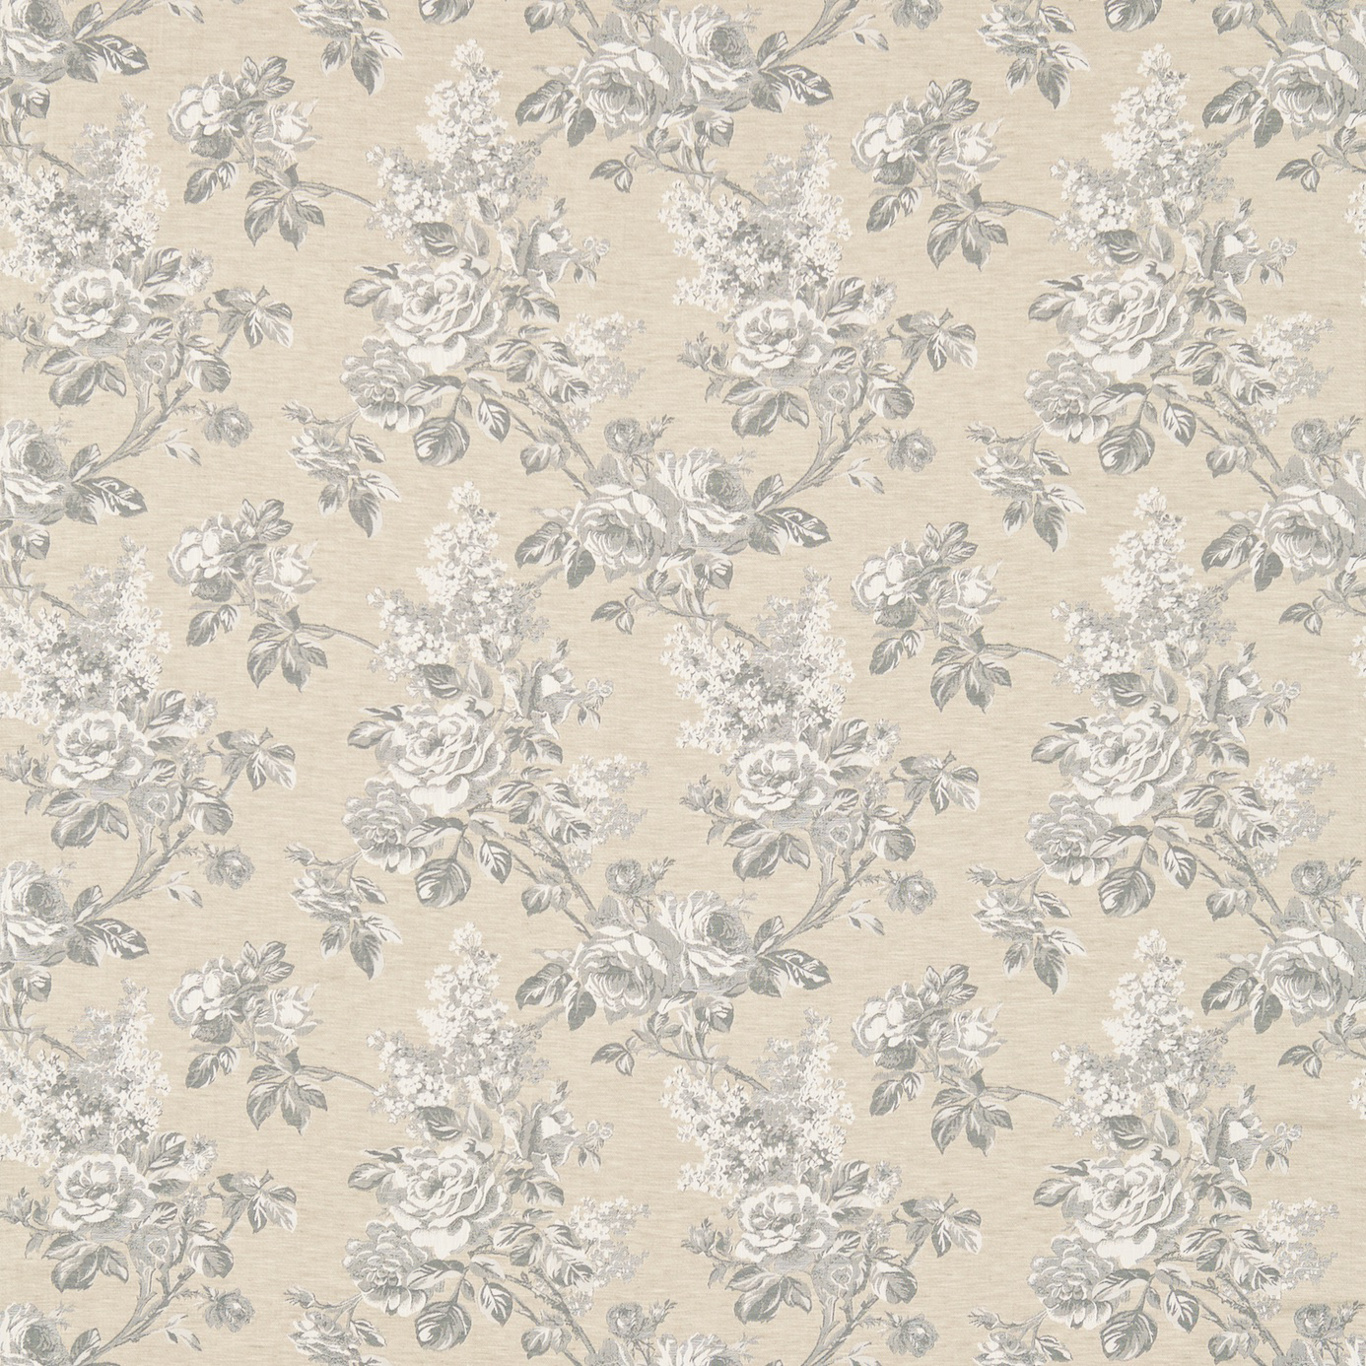 Sorilla Damask Silver/Linen Fabric by SAN